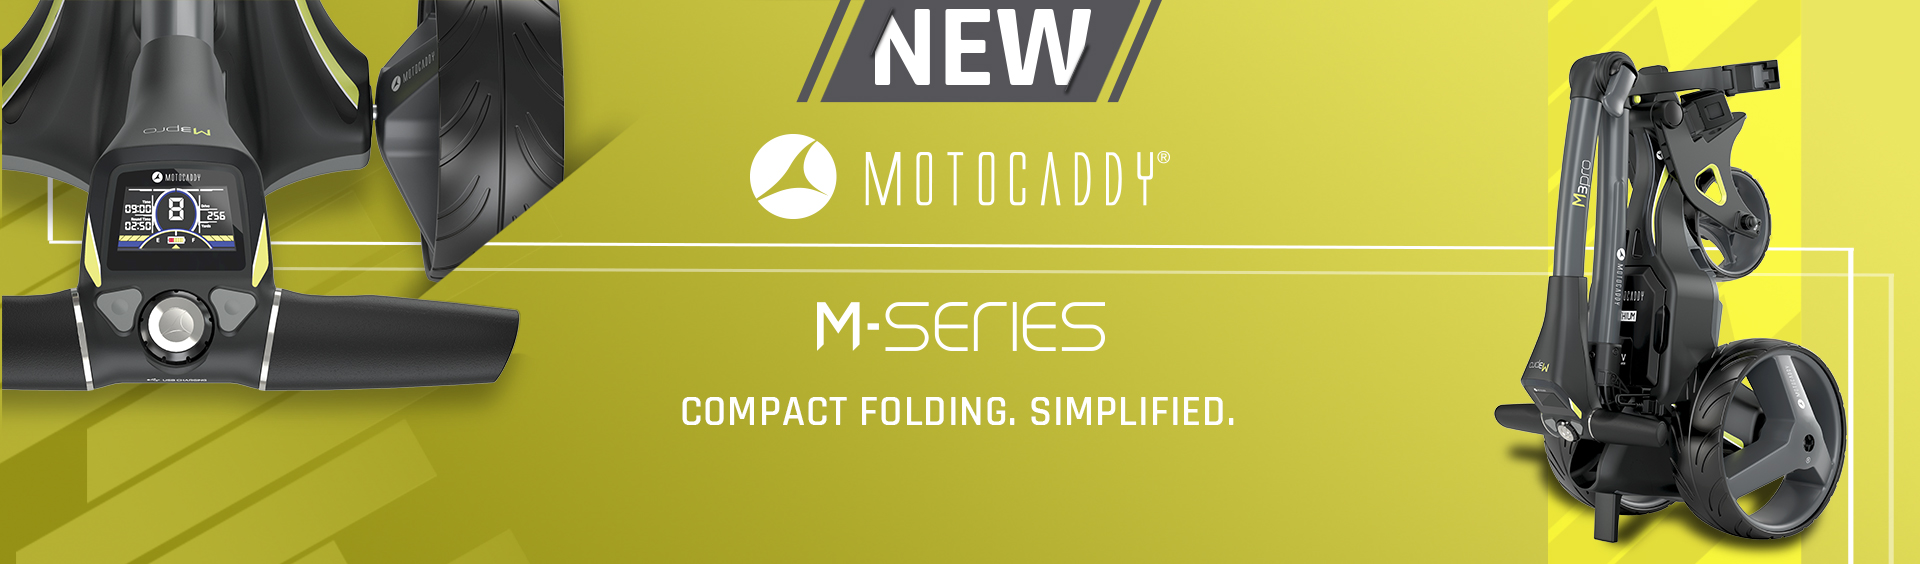 Motocaddy M-Series